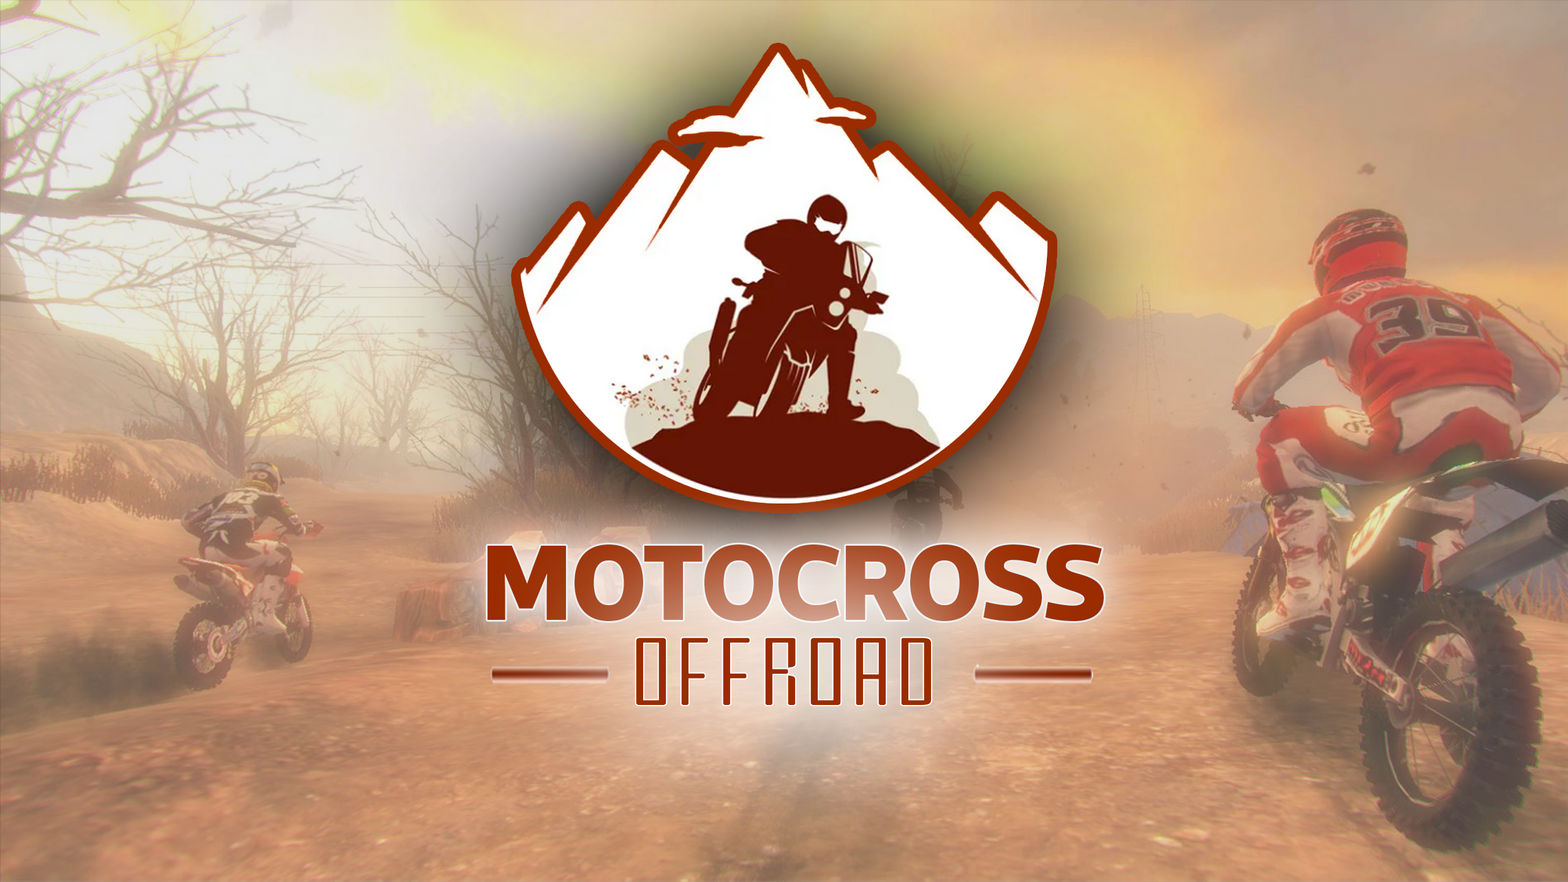 Motocross Offroad